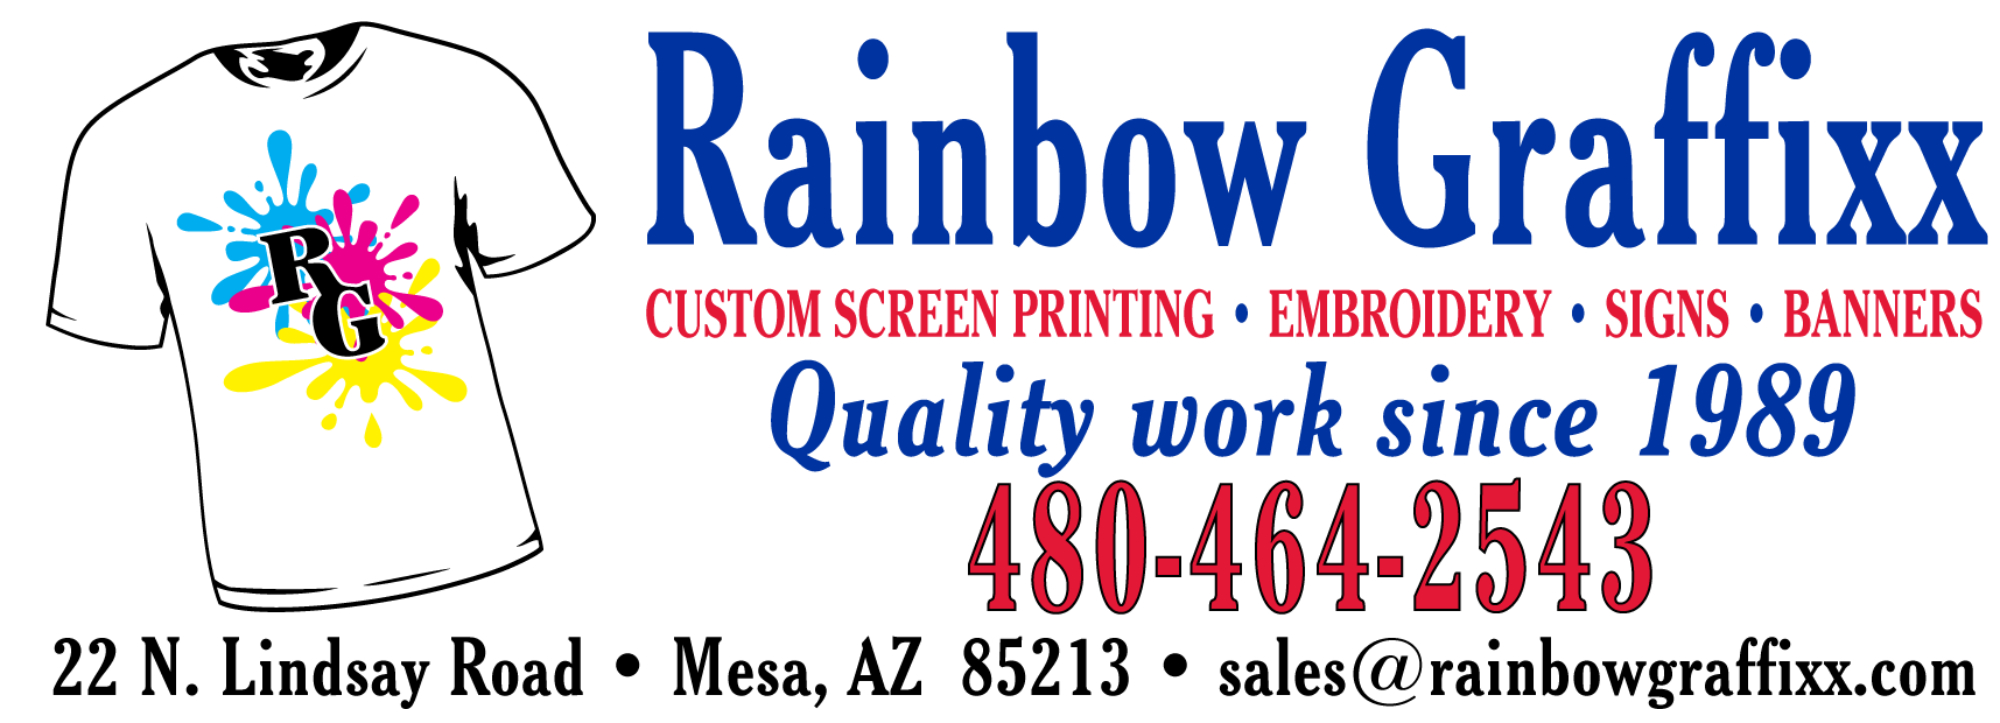 Rainbow Graffix Home Banner Image